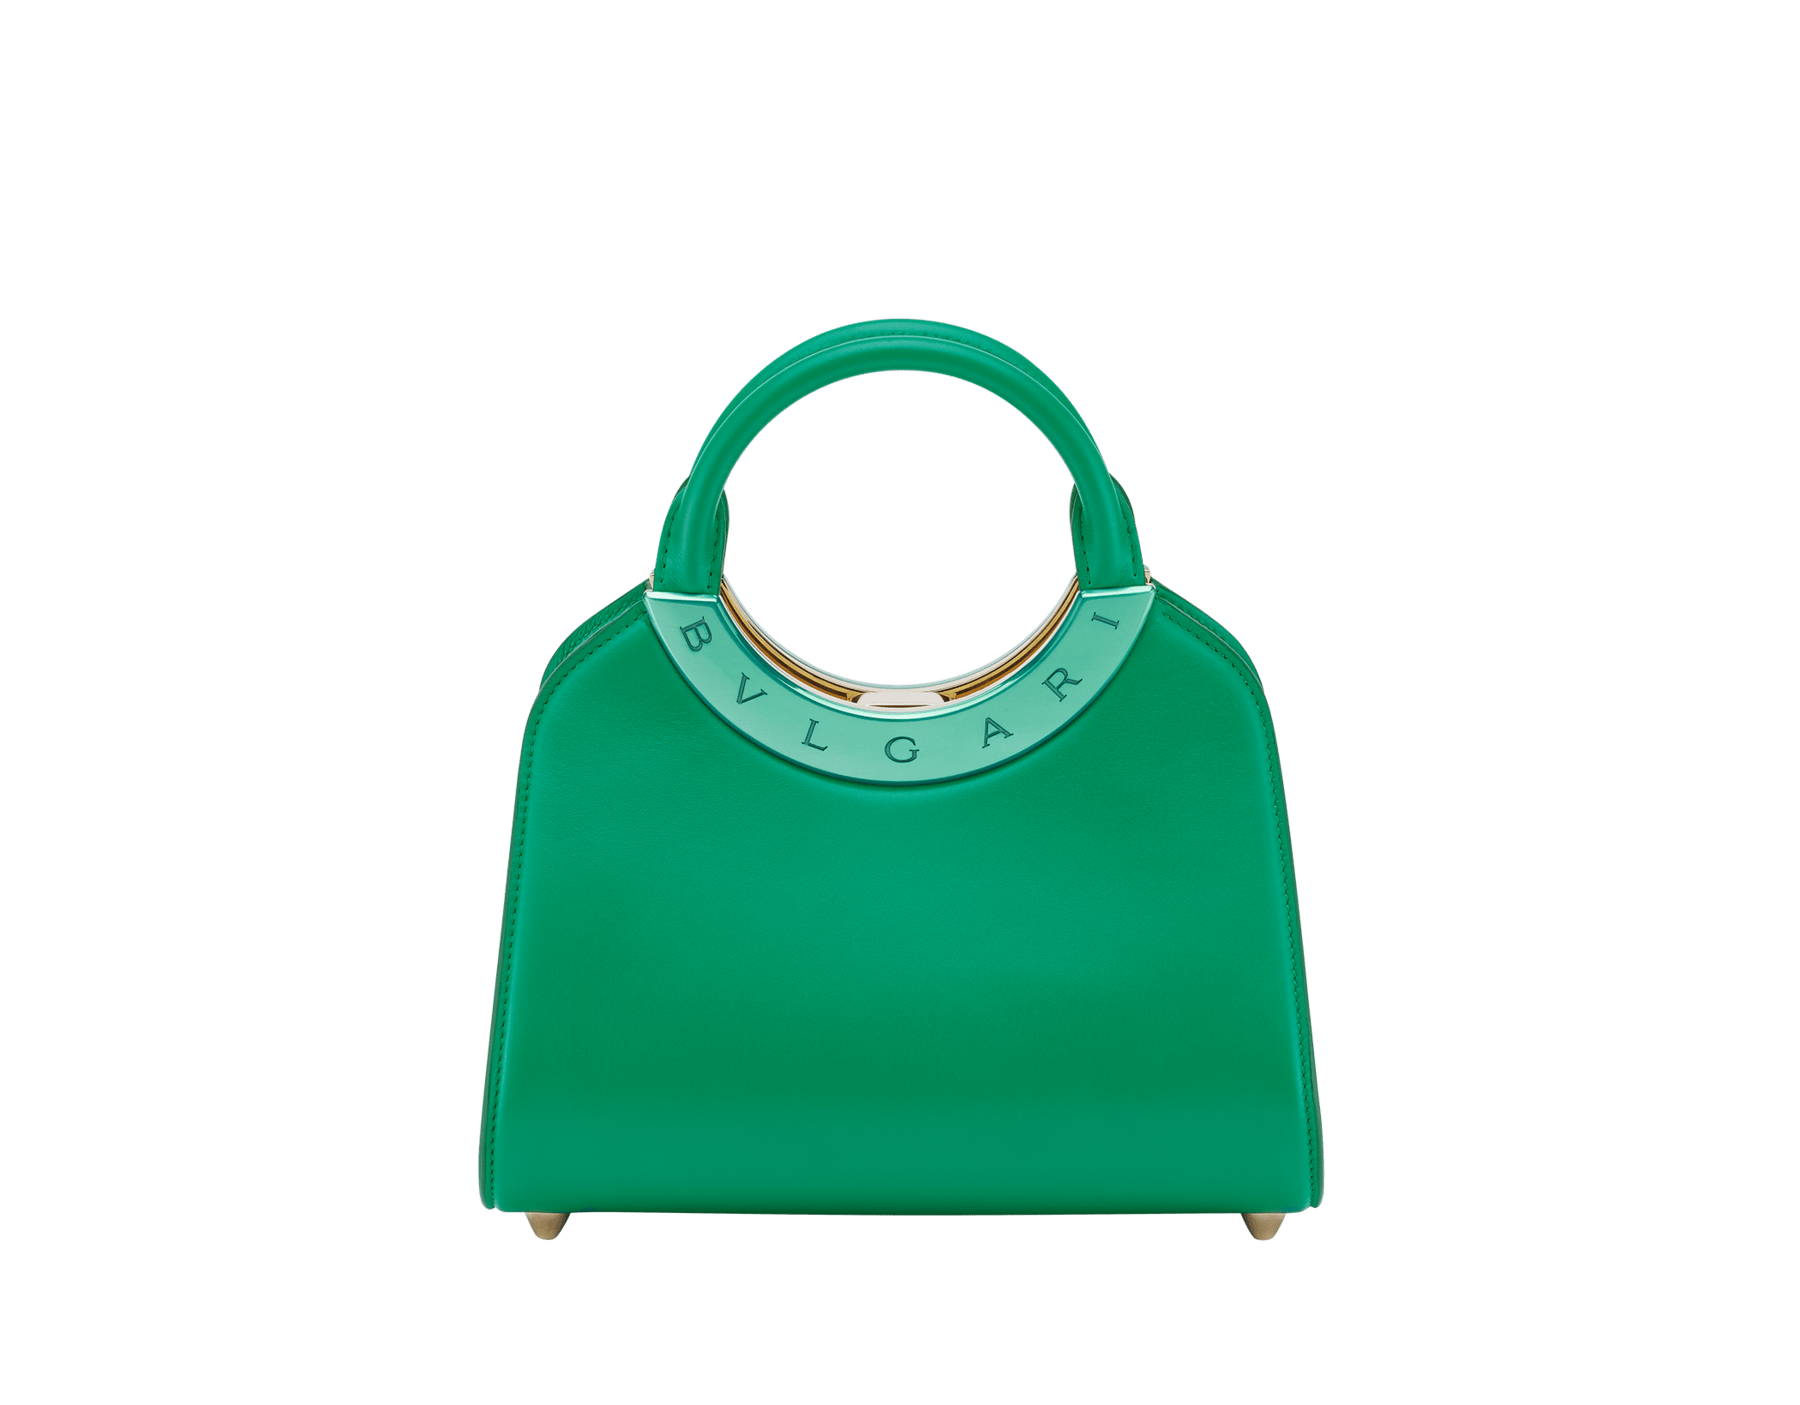 Bvlgari Parfums Perfume Clutch Bag Light Green/Teal